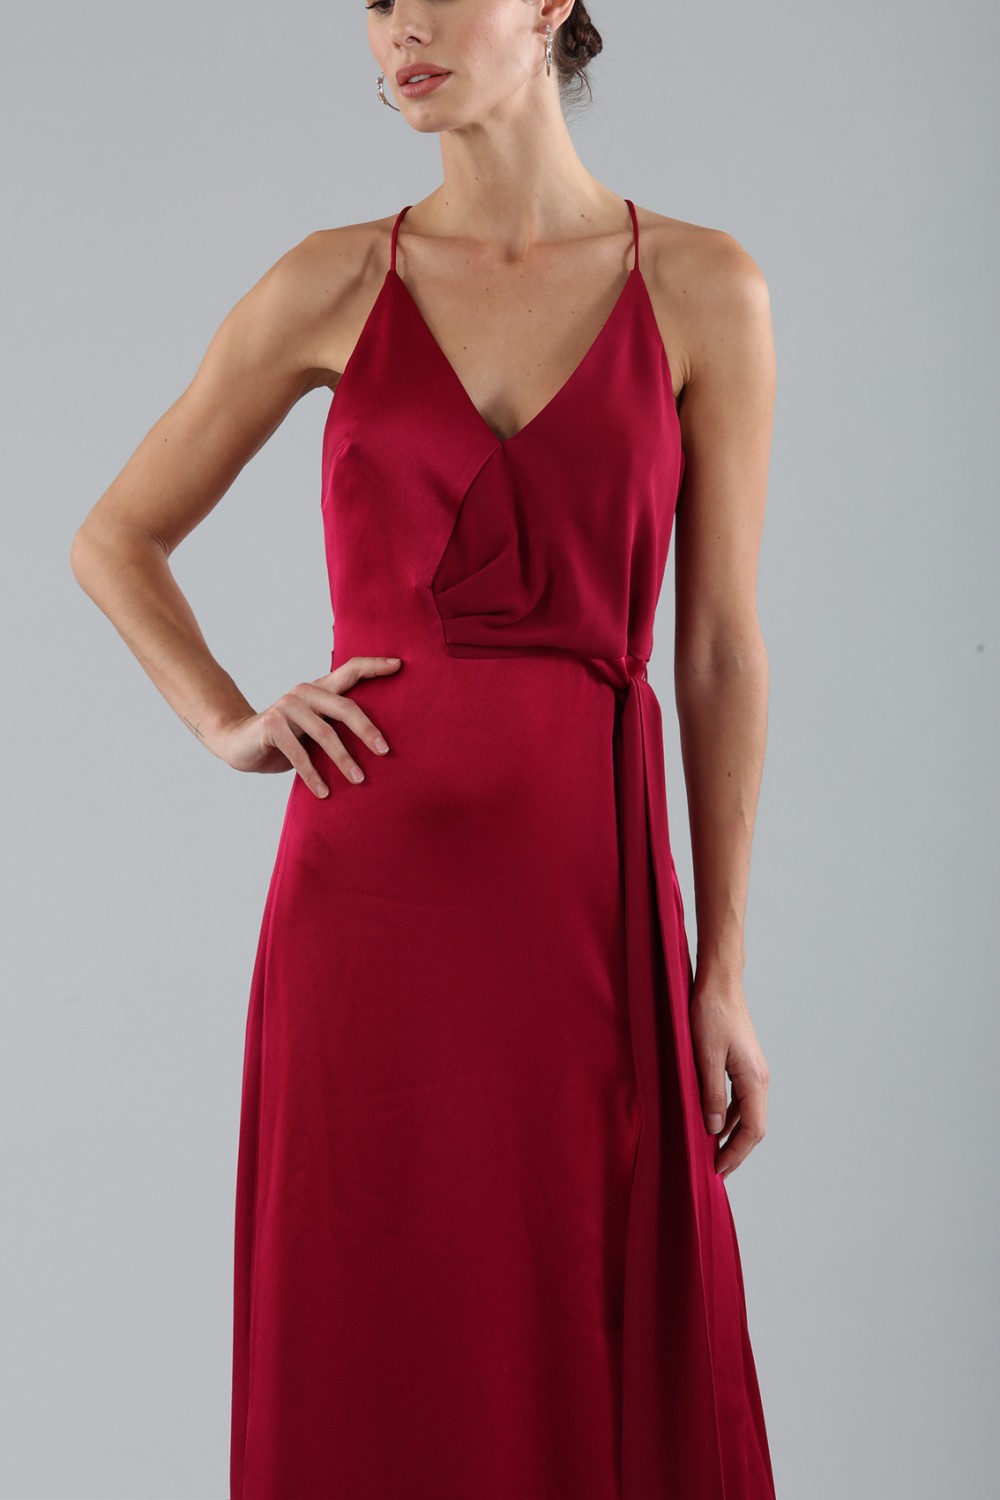 Noleggia Online Cherry Red Satin Dress By Halston Heritage By Halston